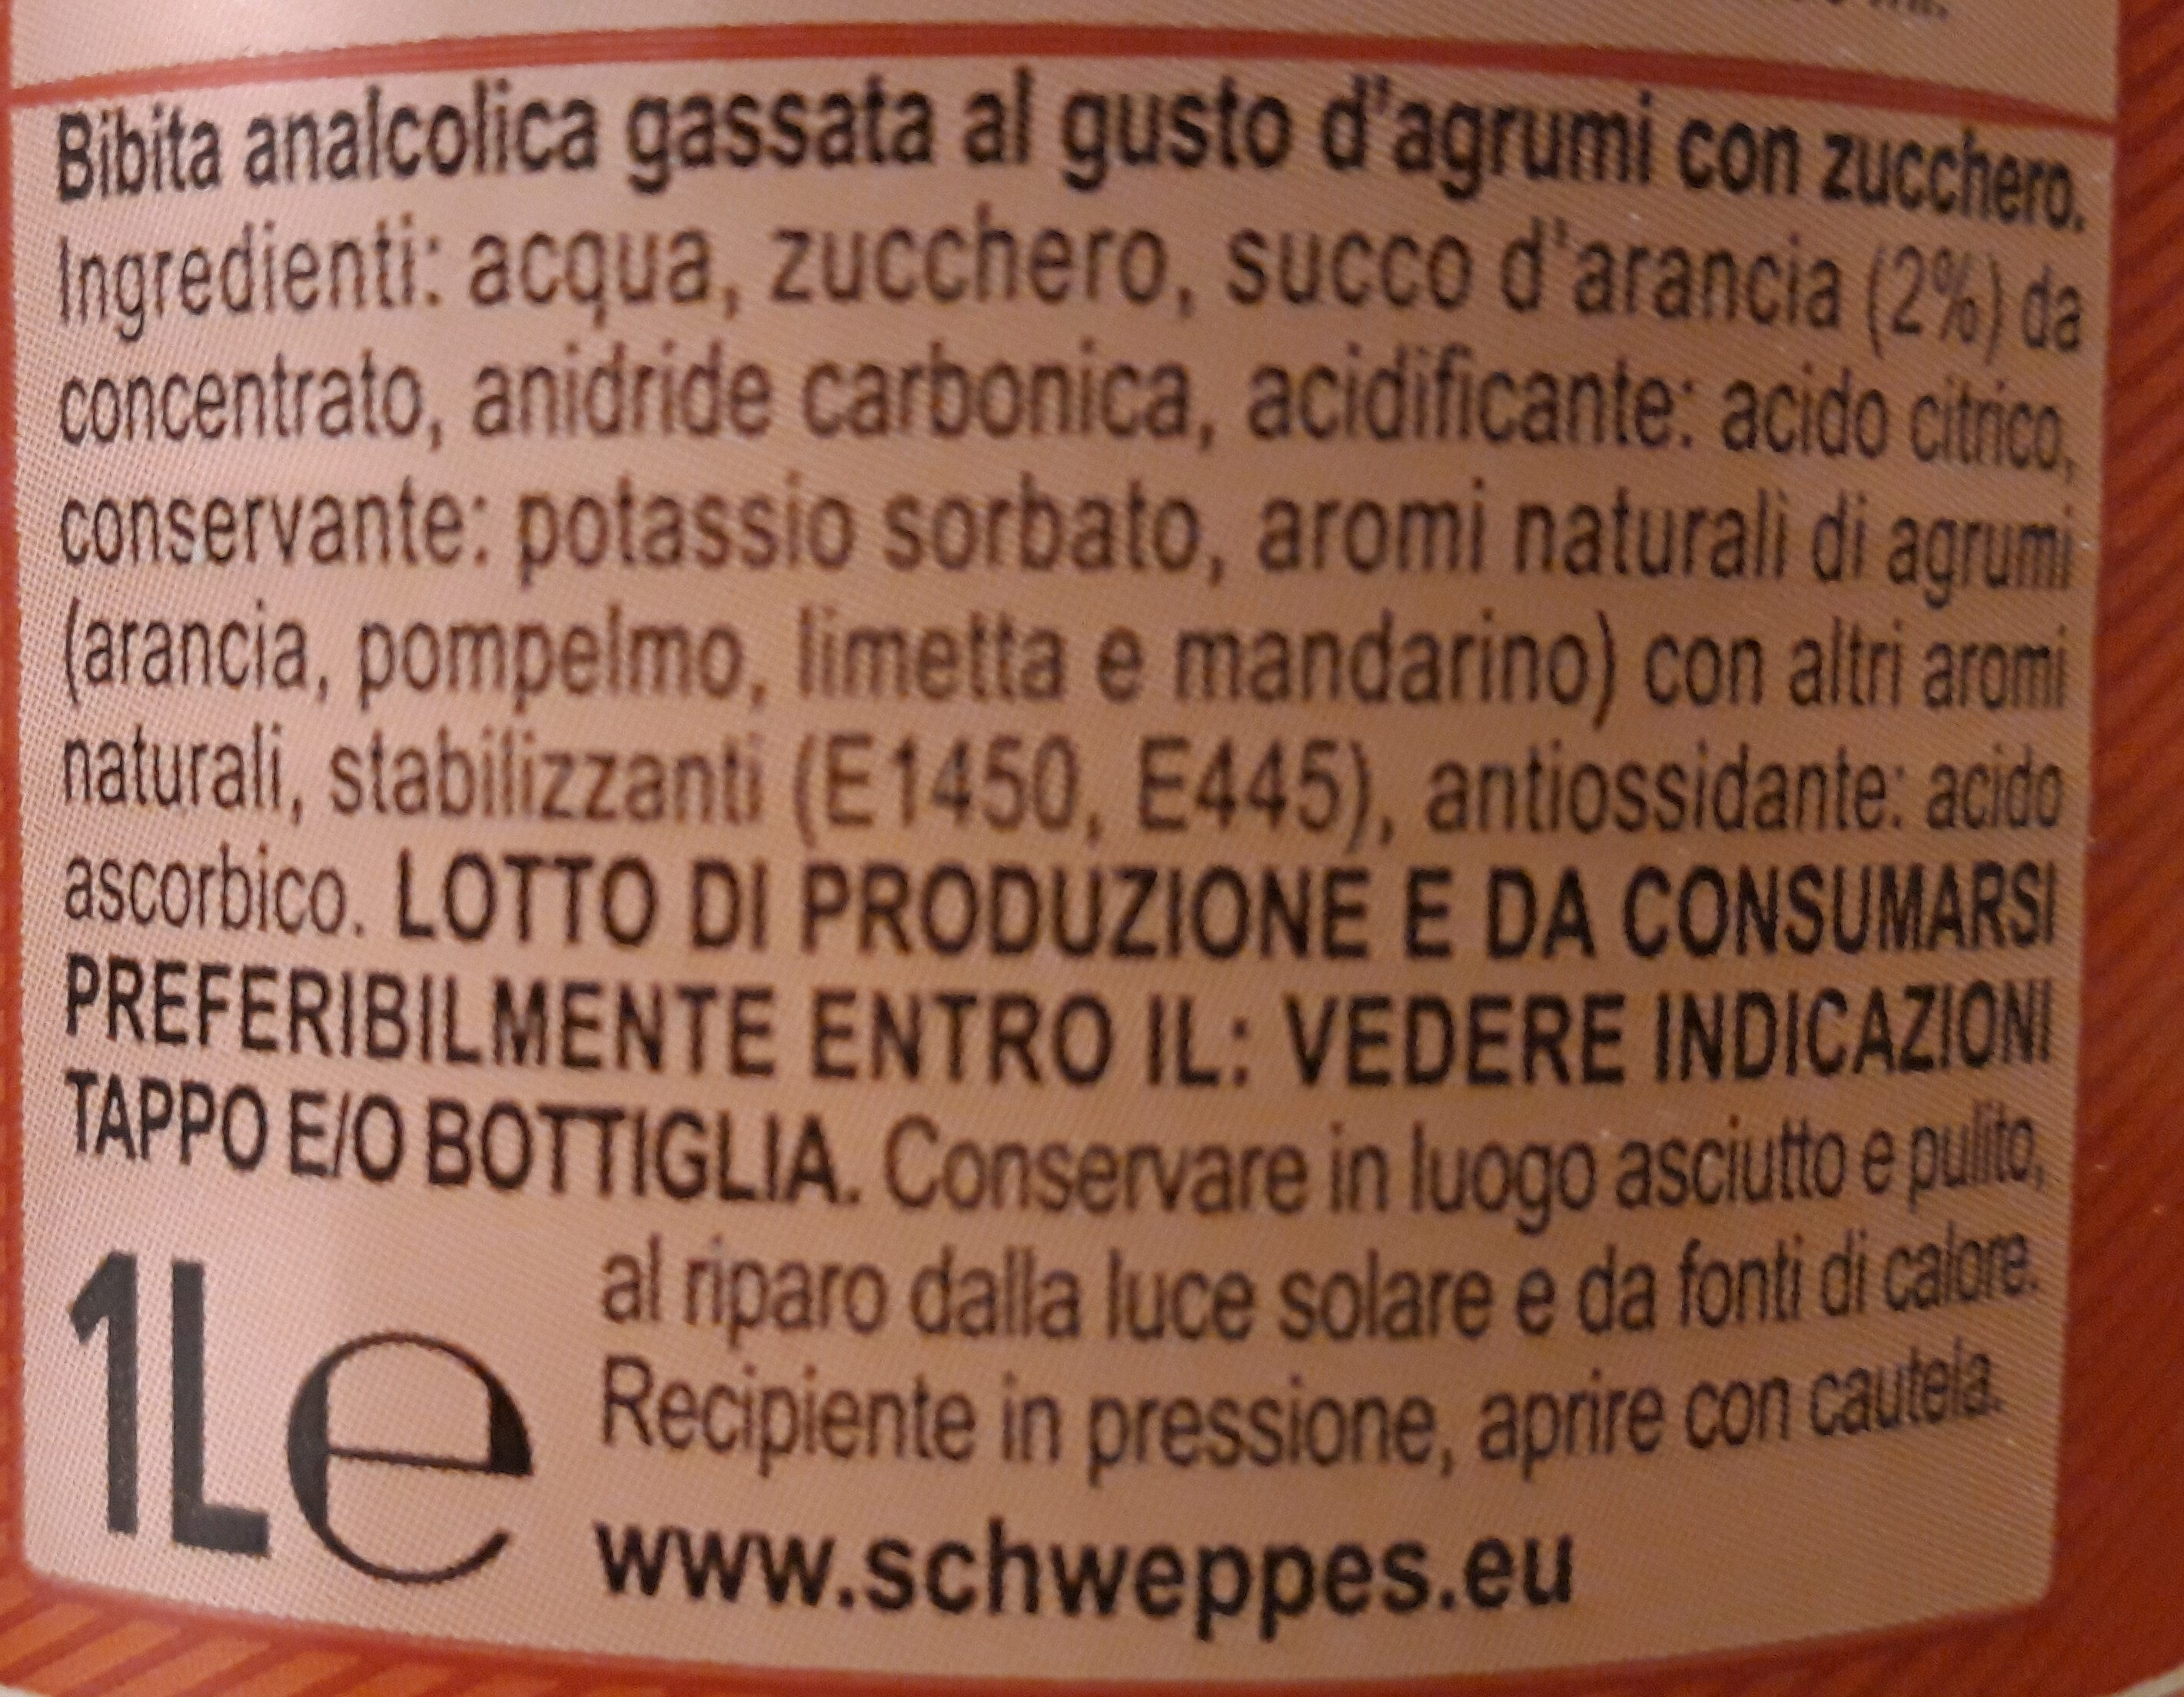 Schweppws gusto agrumi - Ingredienti - it